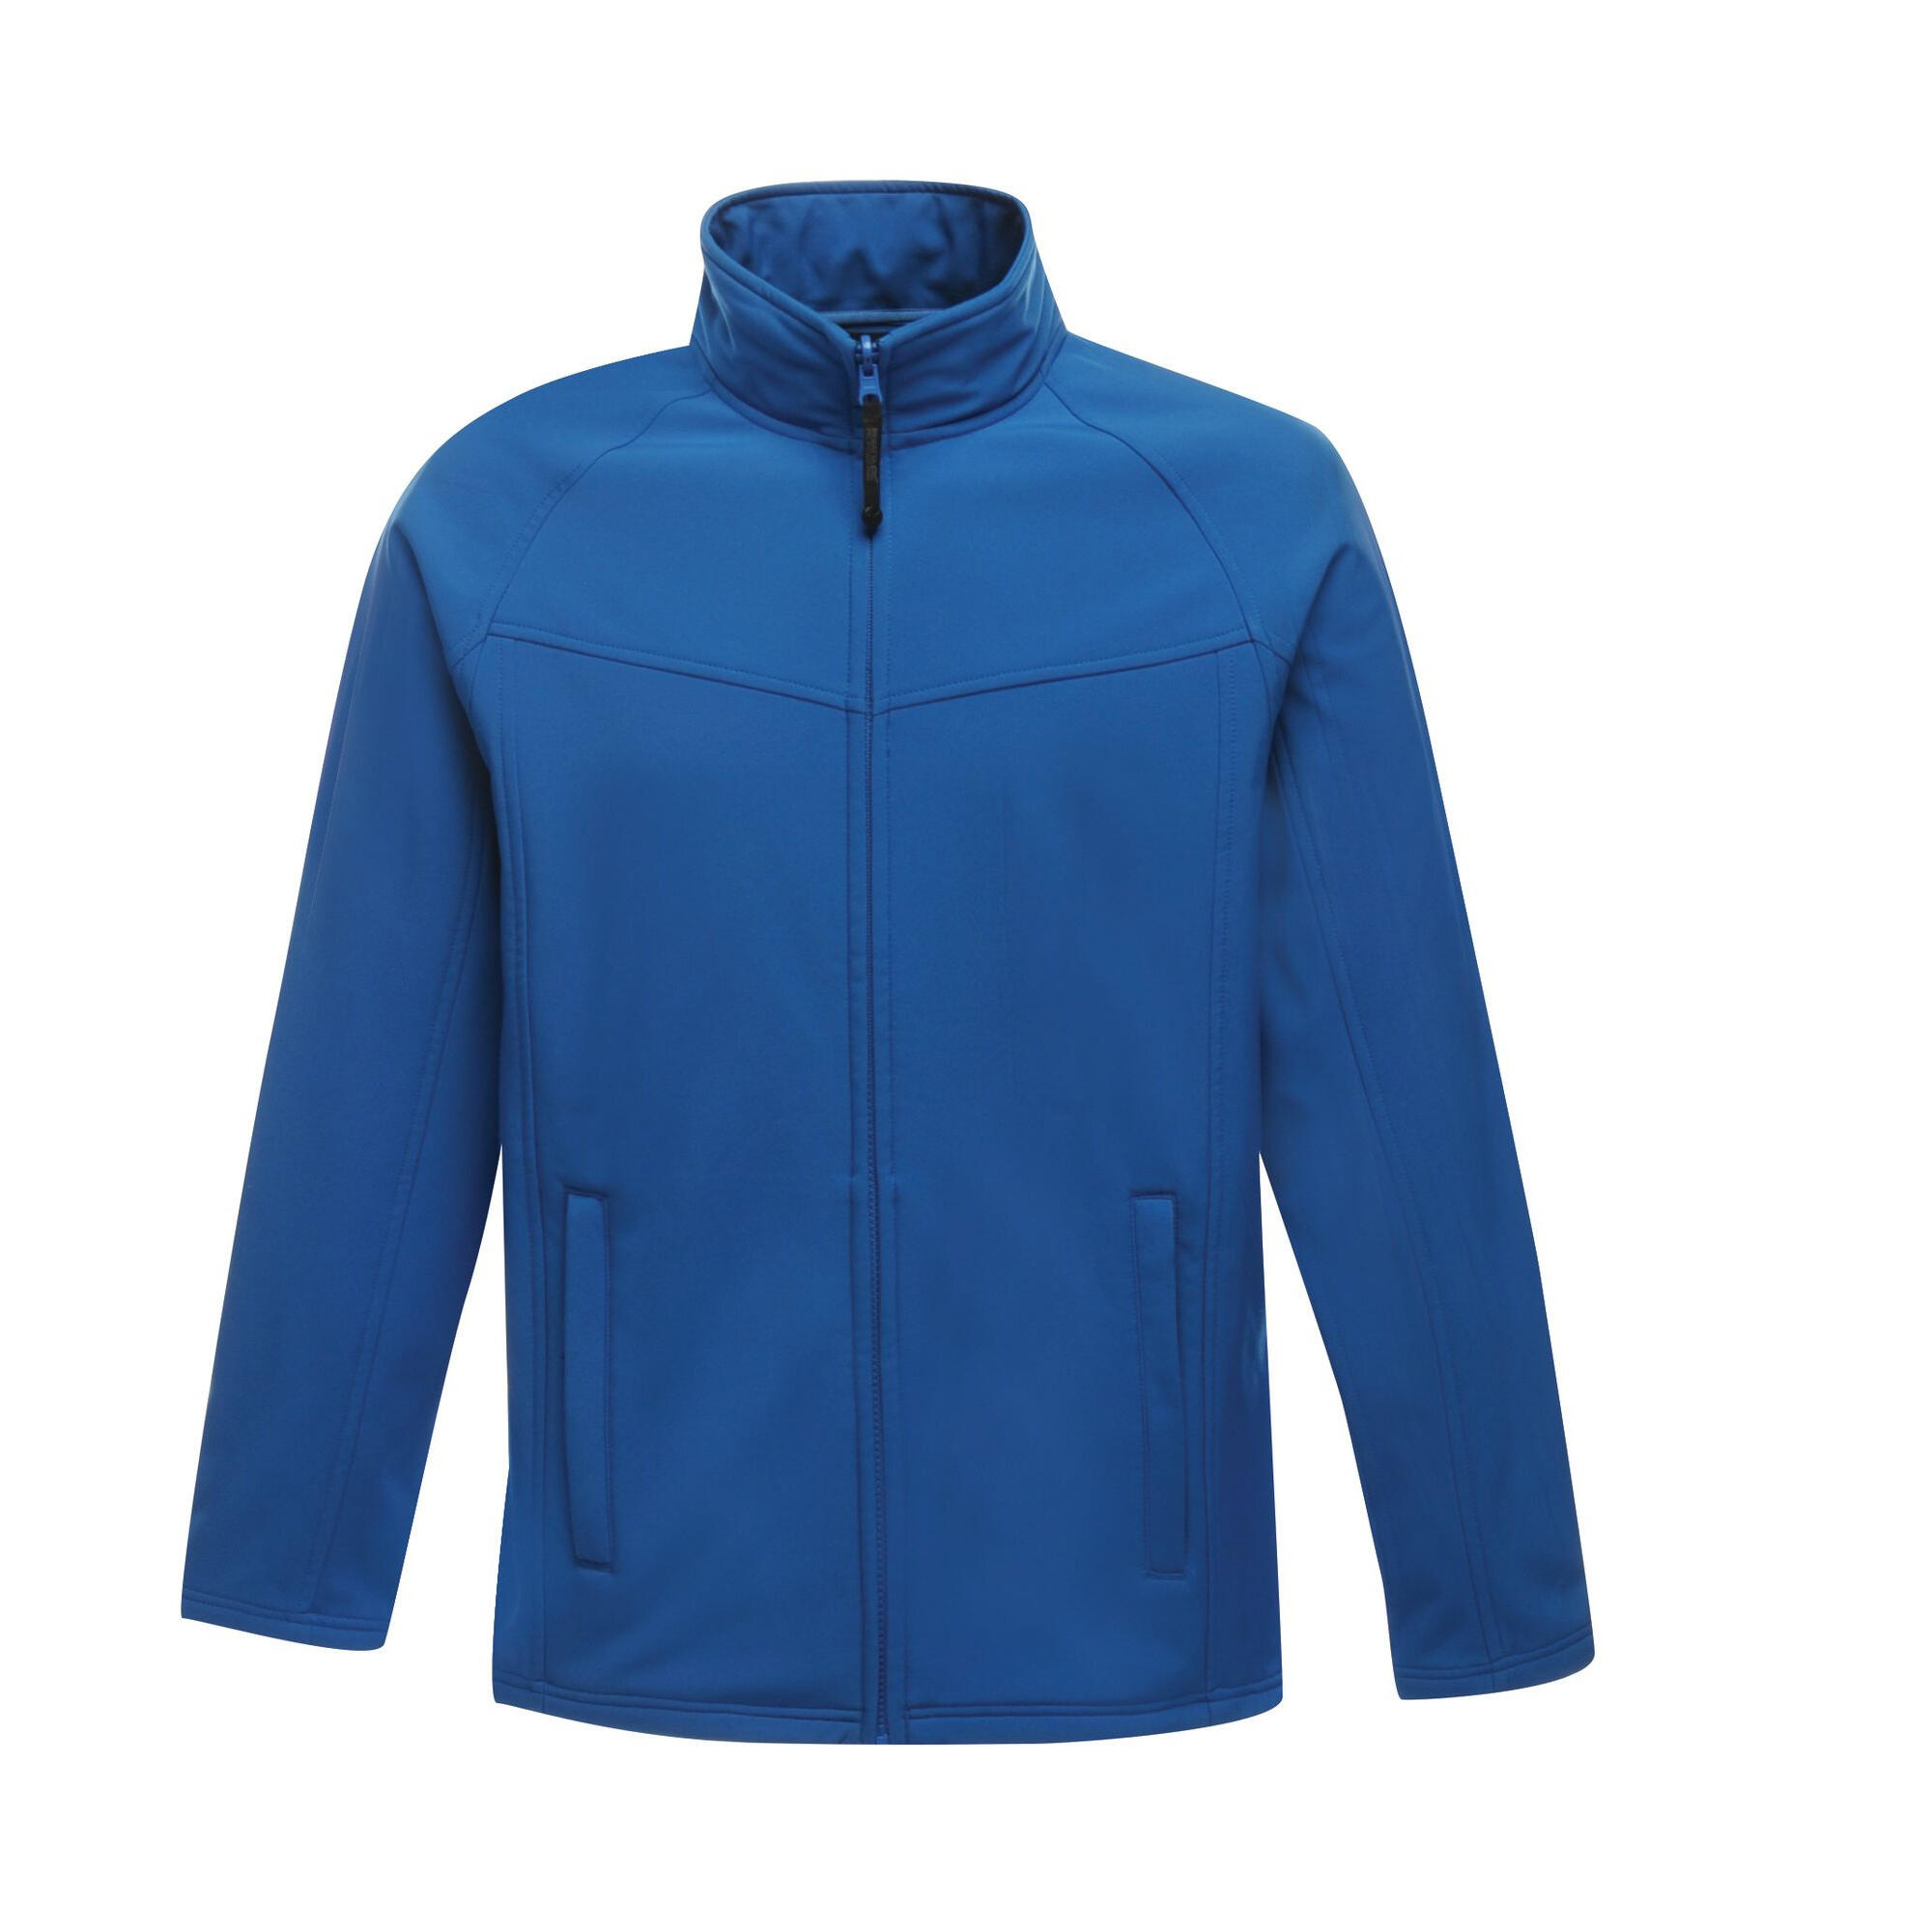 Ladies Uproar Softshell Wind Resistant Jacket (Oxford Blue) 1/2